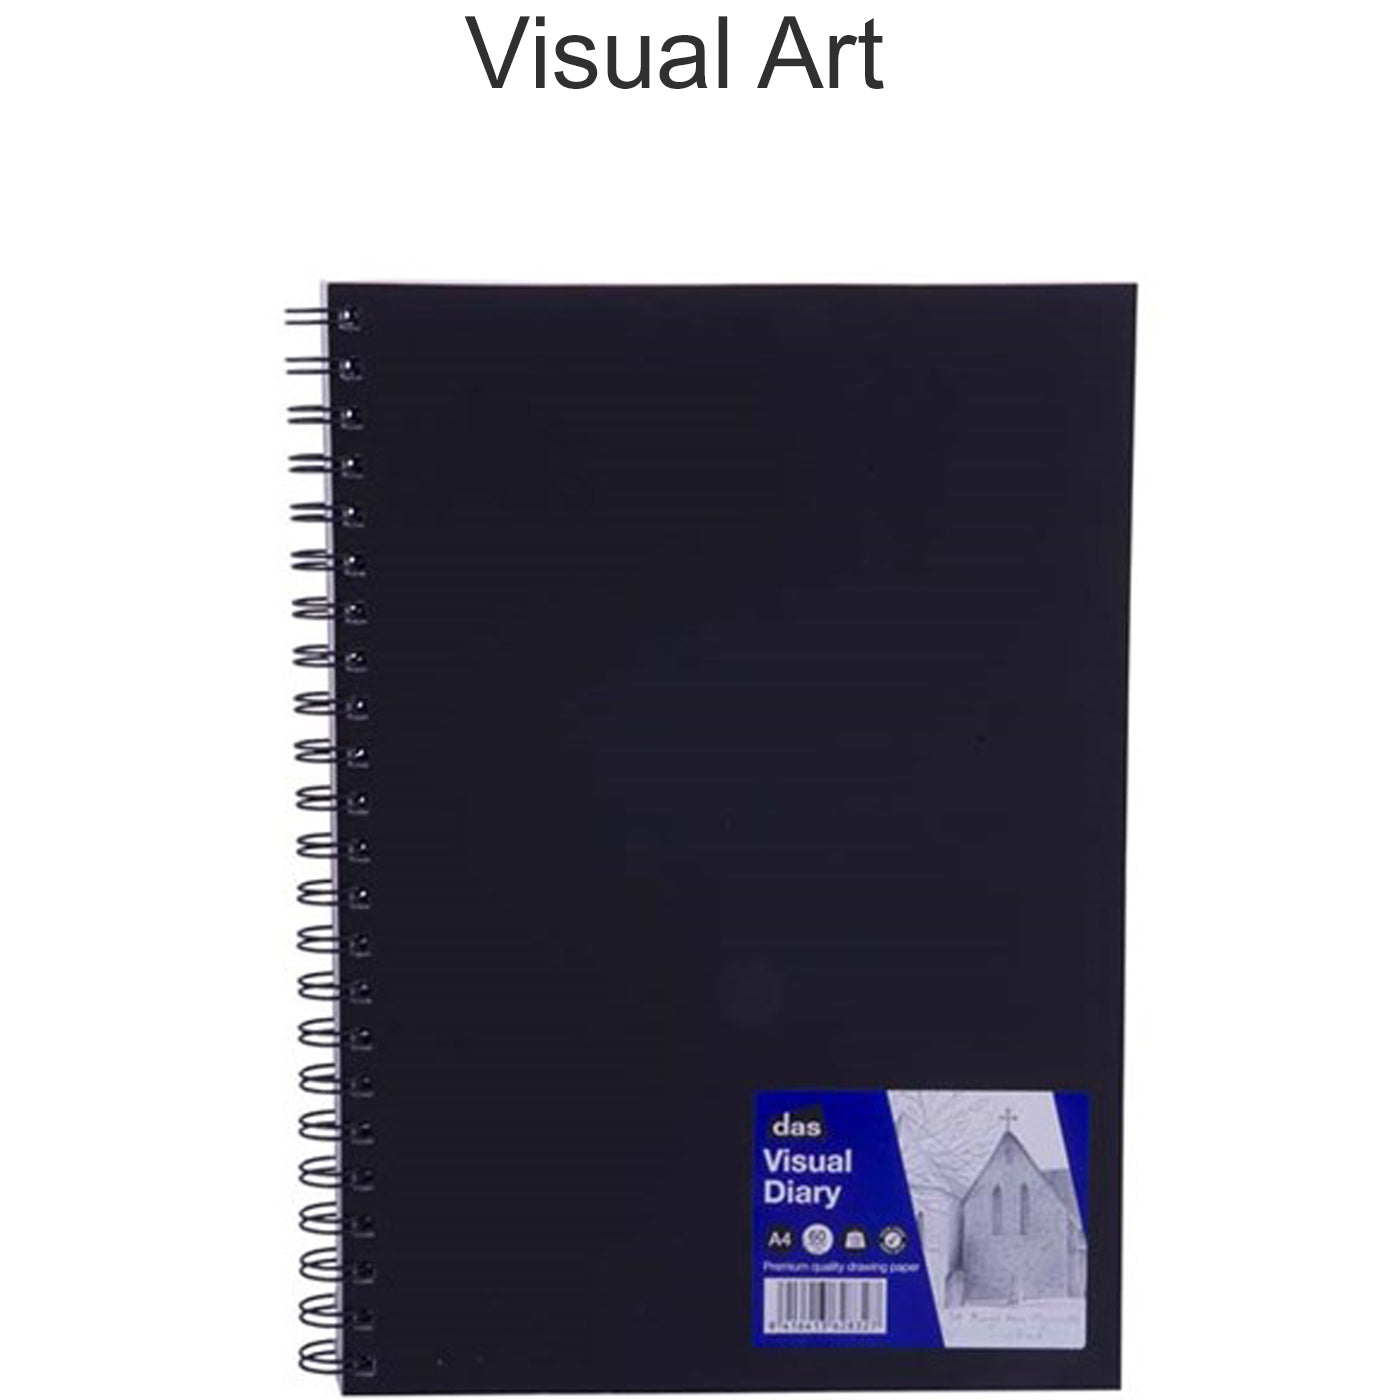 DAS Visual Diary A4 110gsm 60 Sheets